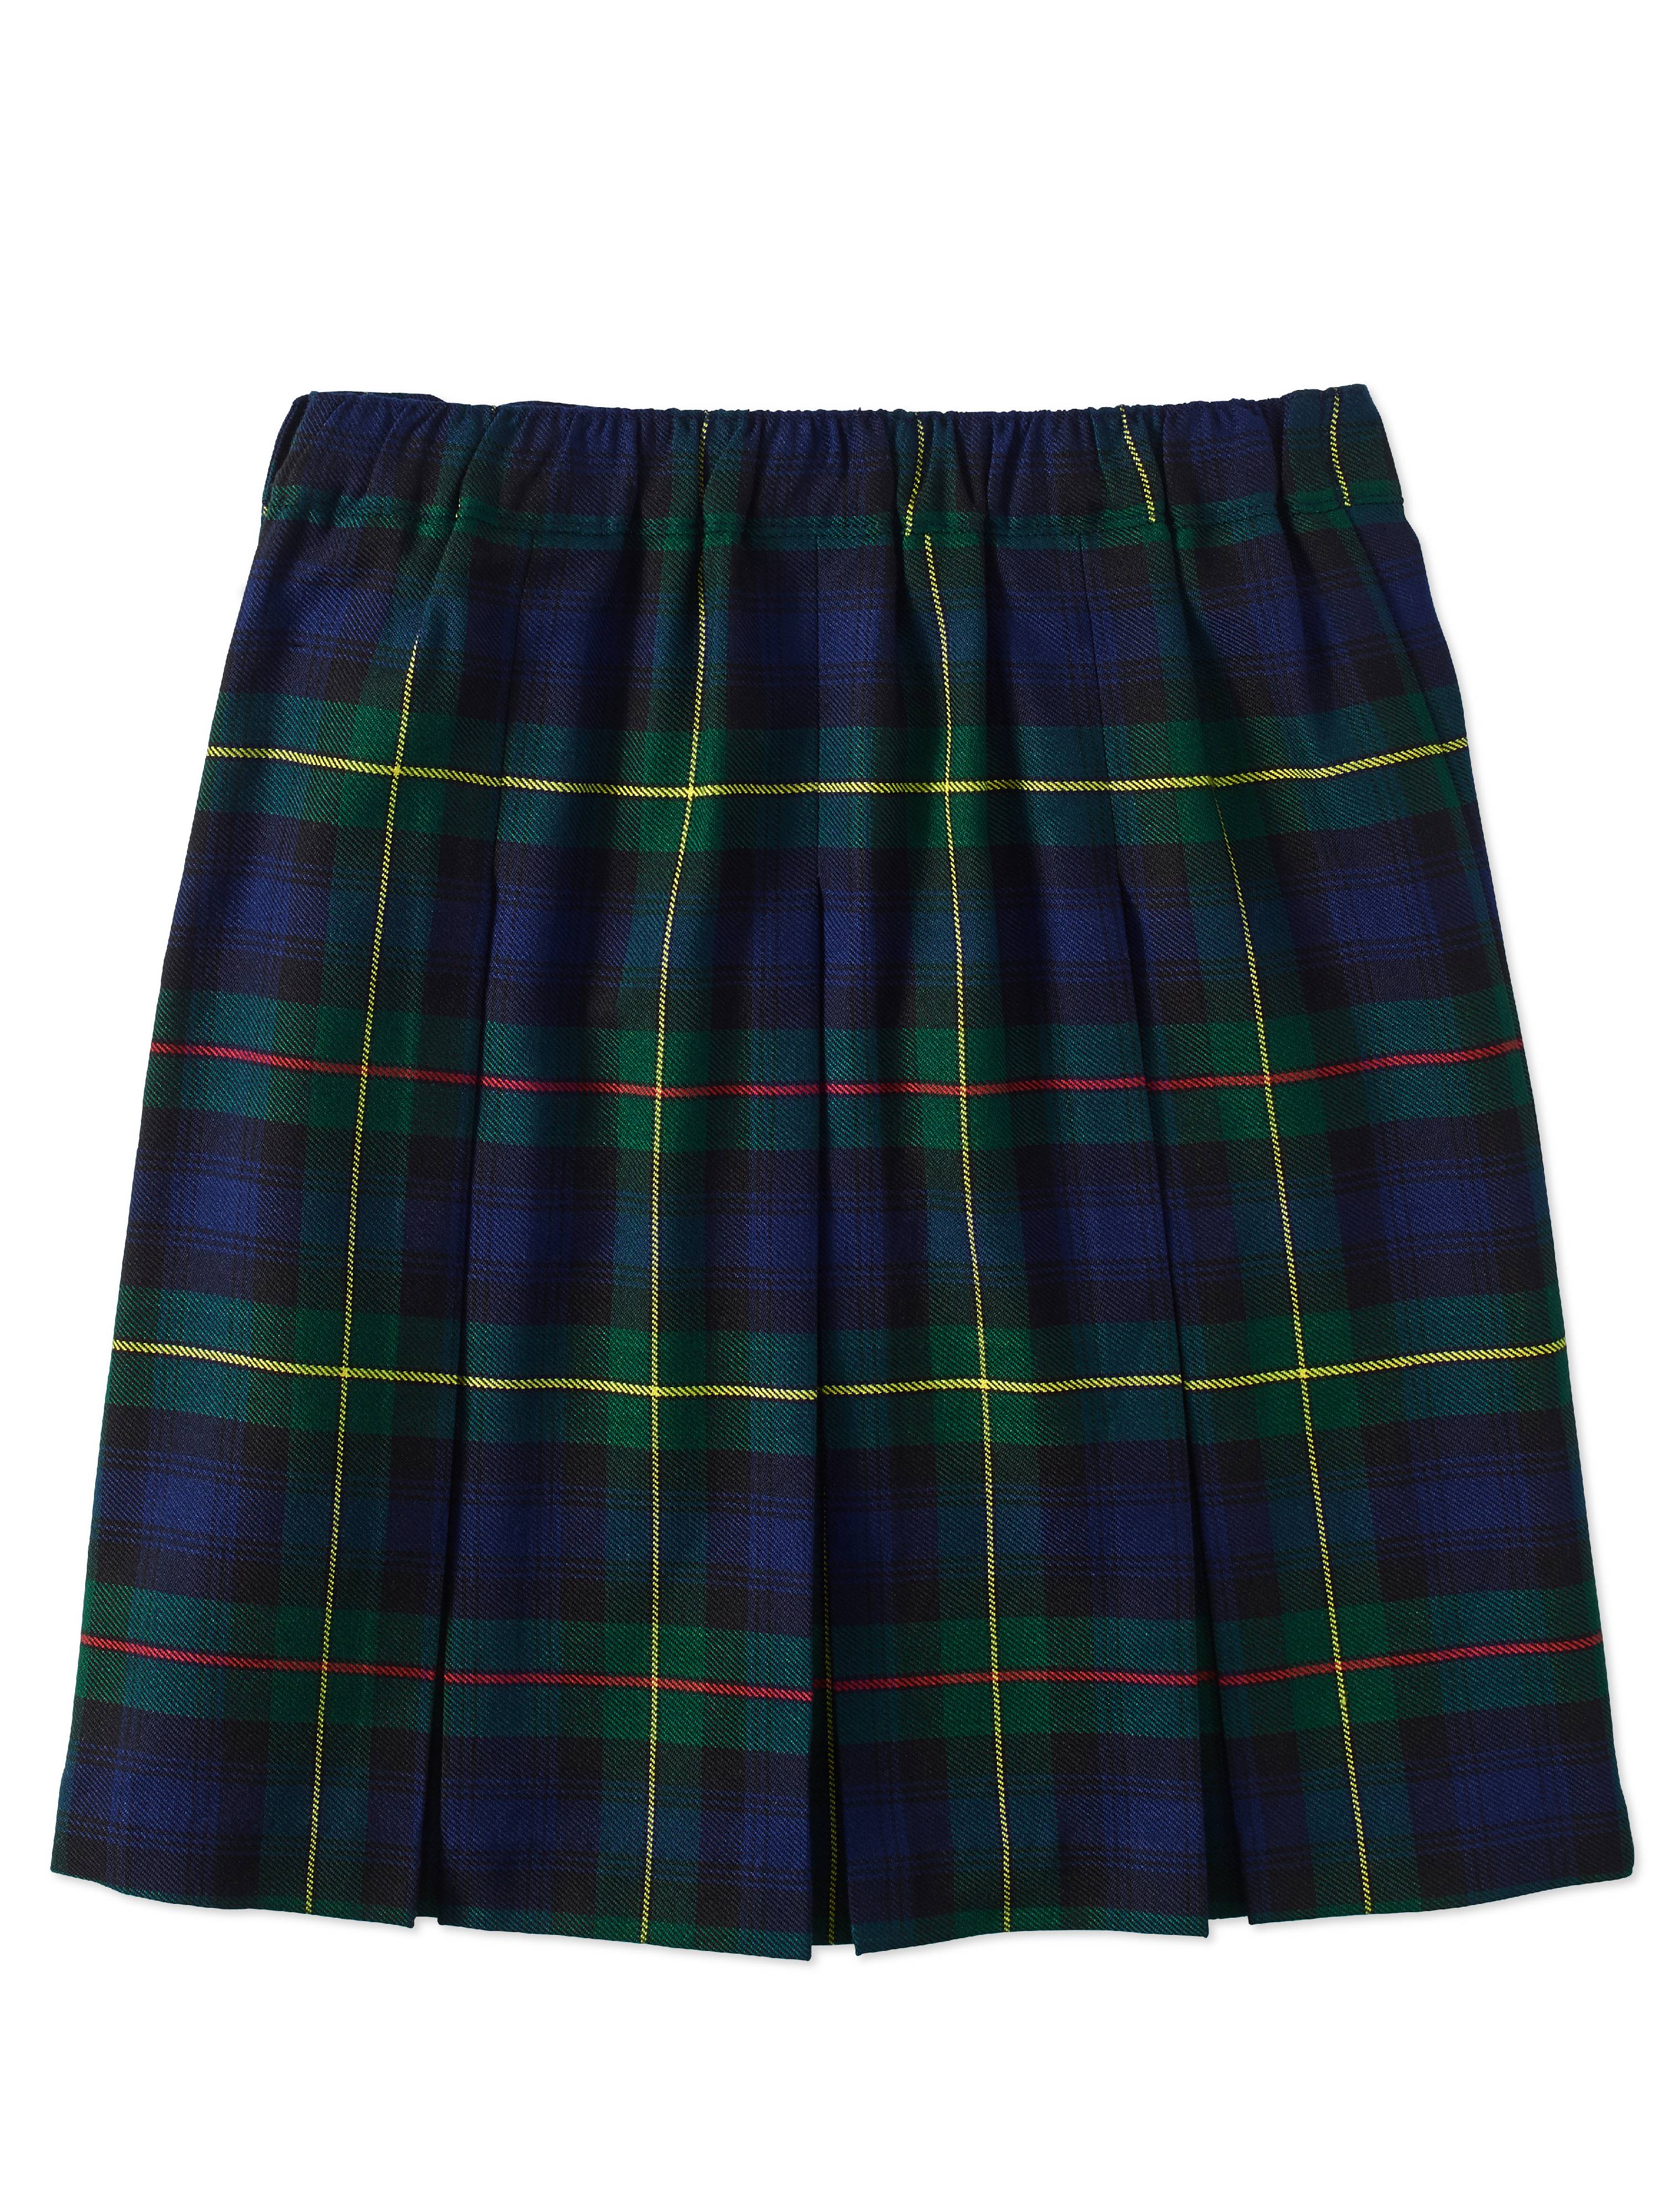 Wonder Nation Girls School Uniform Plaid Parochial Skirt, Sizes 4-16 - image 3 of 6